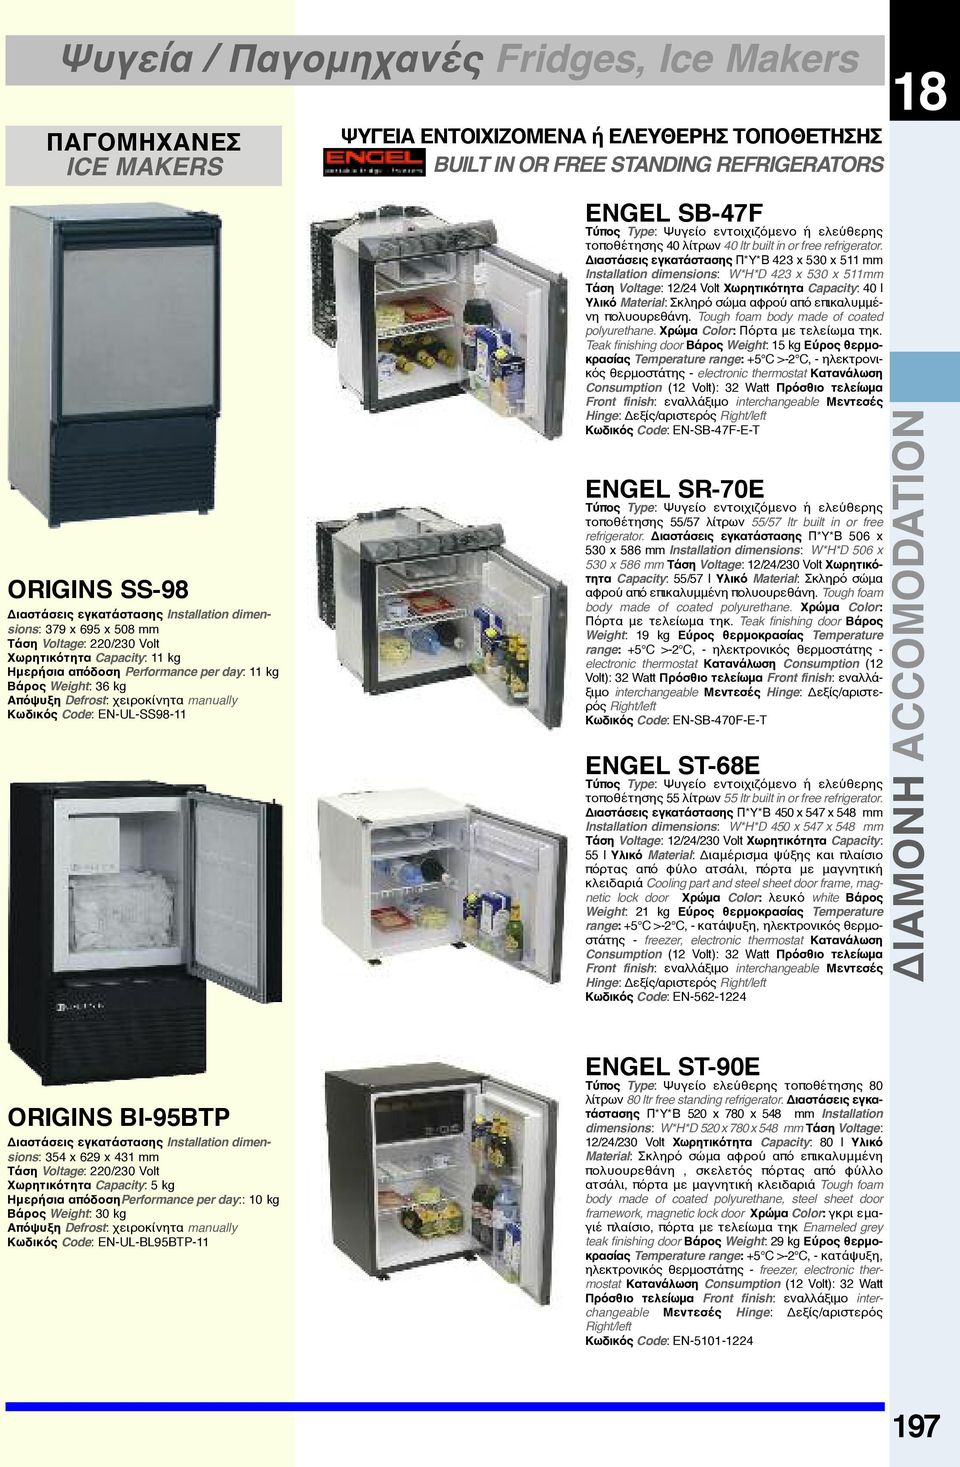 STANDING REFRIGERATORS ENGEL SB-47F Τύπος Type: Ψυγείο εντοιχιζόμενο ή ελεύθερης τοποθέτησης 40 λίτρων 40 ltr built in or free refrigerator.